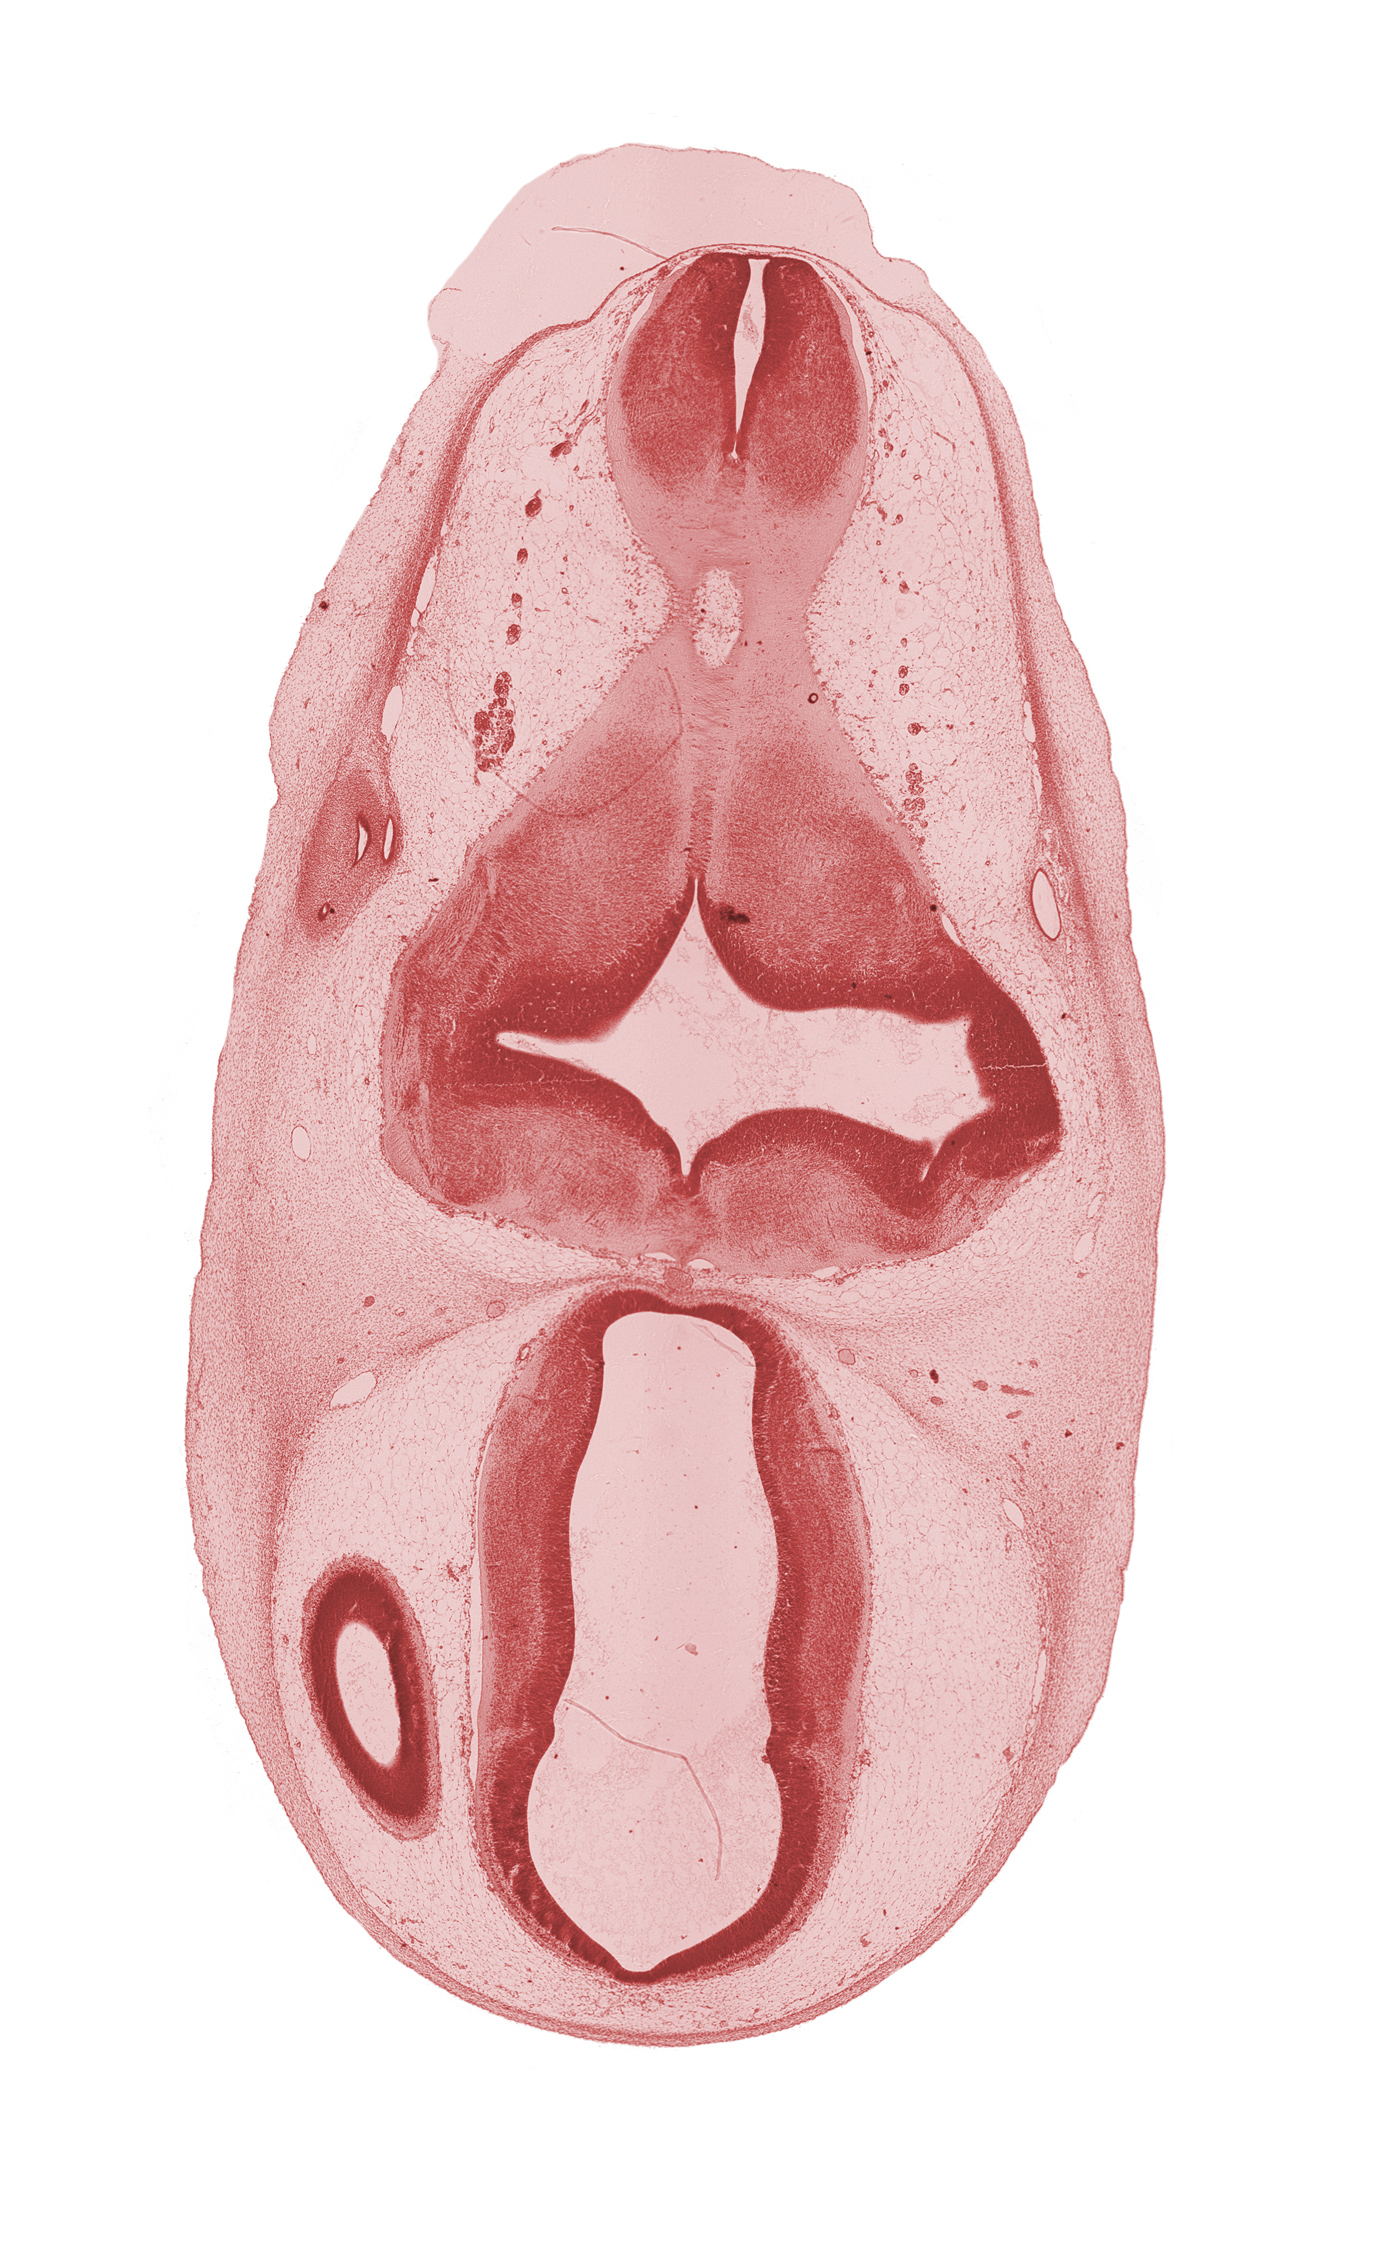 dorsal sulcus, dorsal thalamus, edge of lateral ventricle, endolymphatic sac, epithalamus, hypothalamus, intermediate zone, marginal ridge, marginal zone, otic capsule, pyramidal tract region, rhombencoel (fourth ventricle), third ventricle, ventral thalamus, ventricular zone